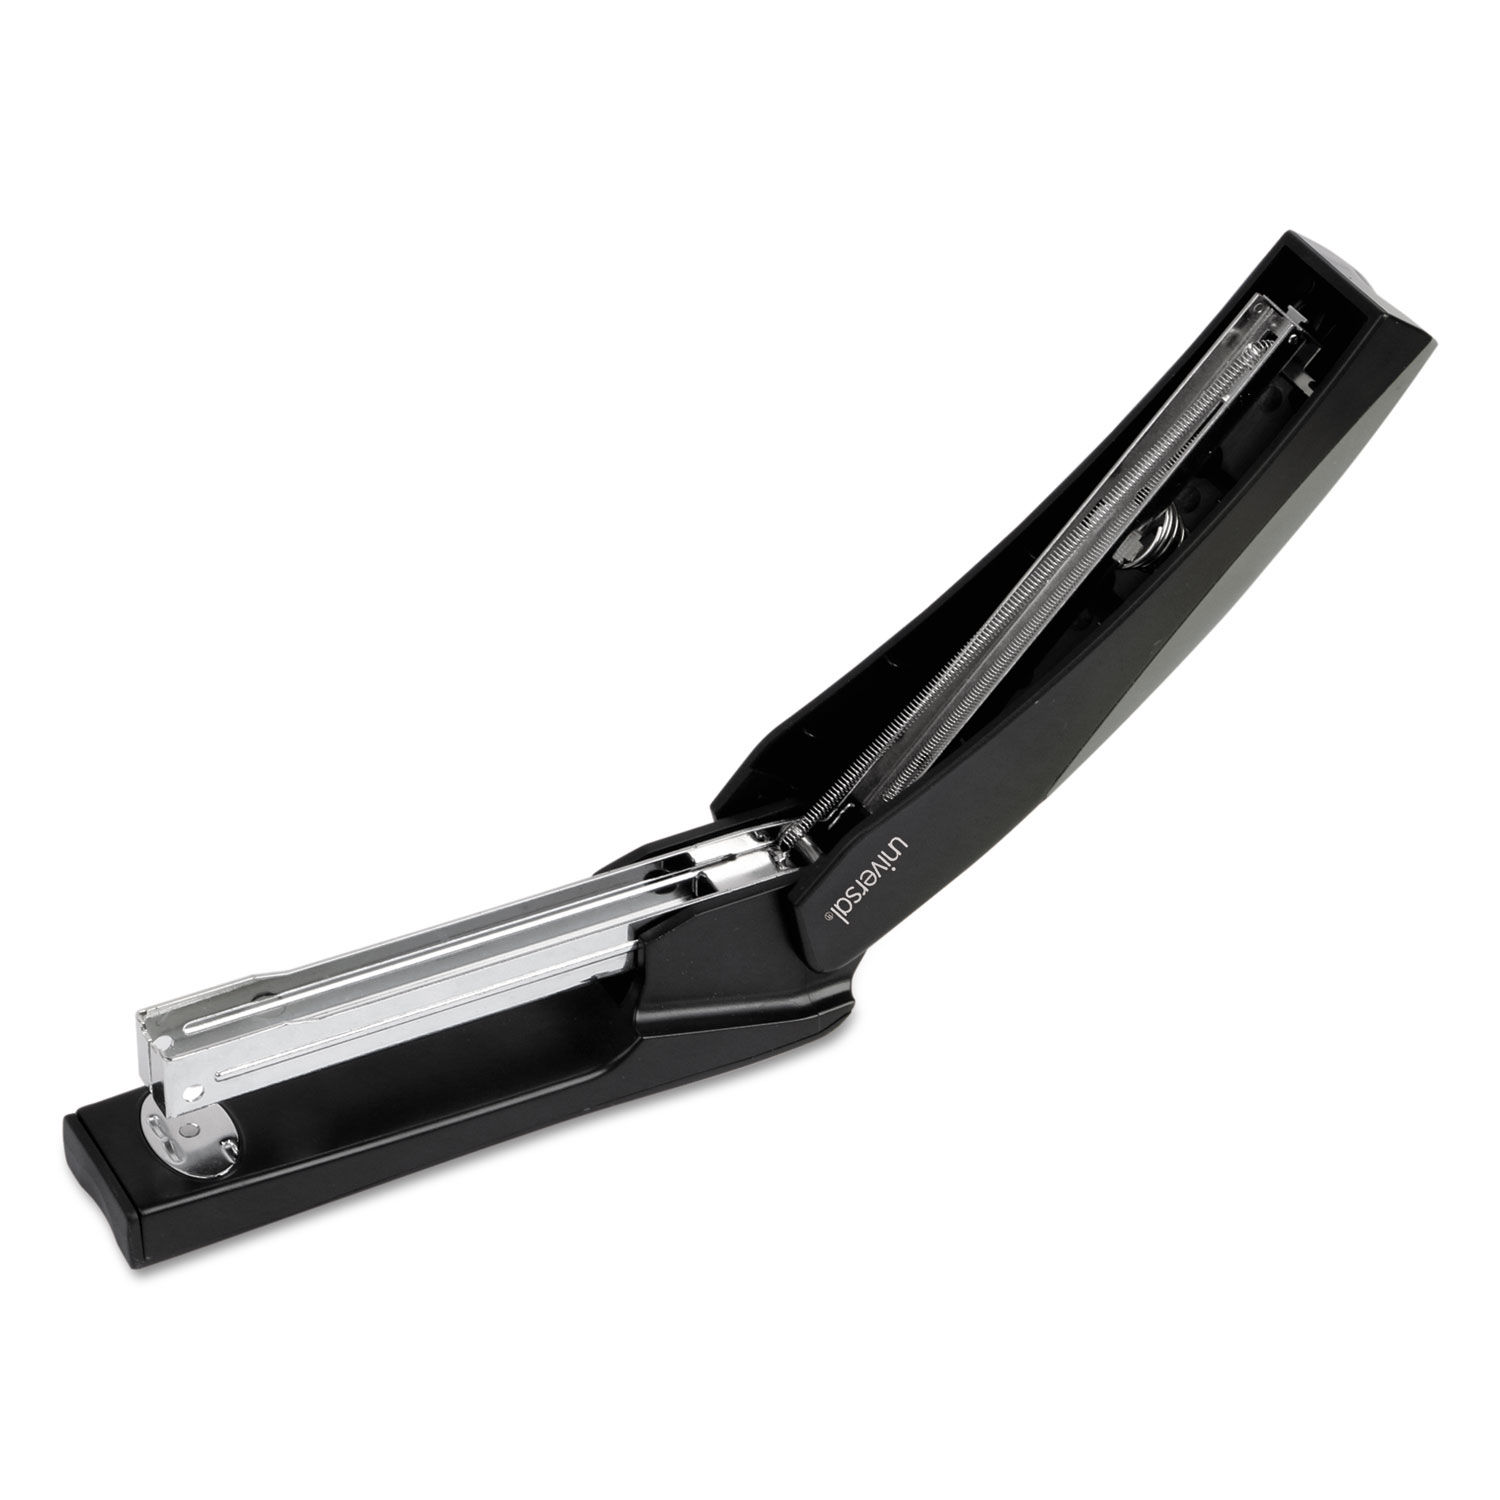 Universal Unv43148 Stand-up Full Strip Stapler 20-sheet Capacity for sale online